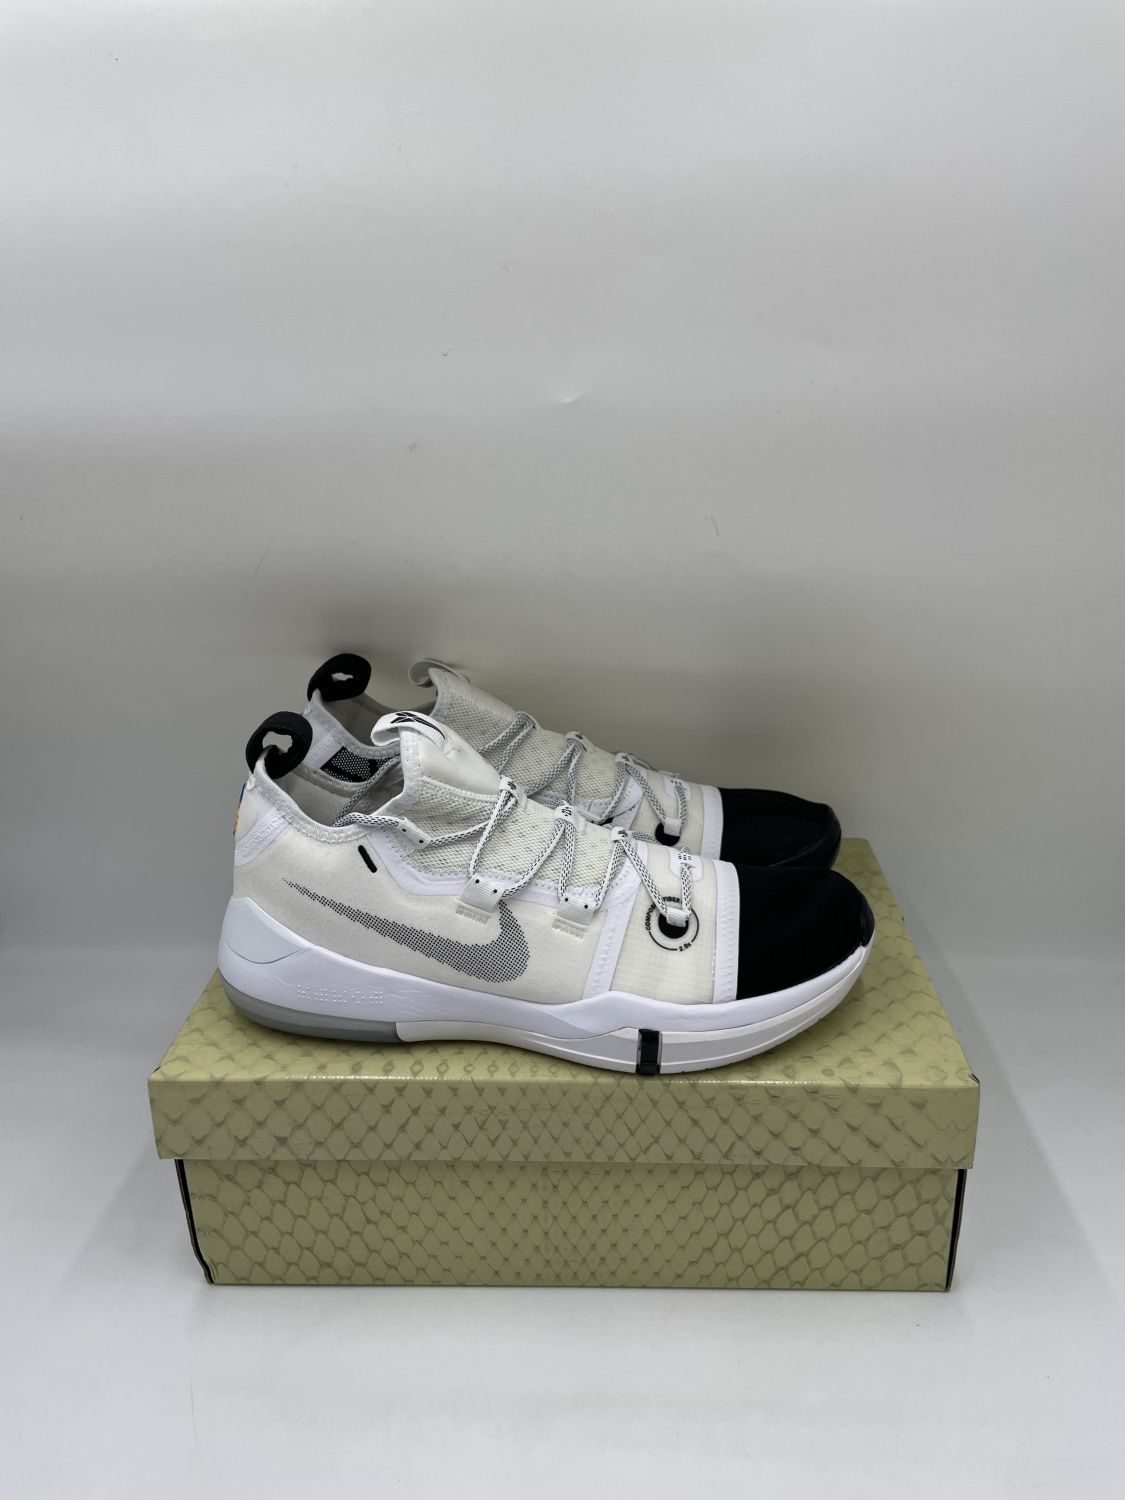 Nike Kobe AD Exodus Black Toe Men's Sz 7.5 White Black AR5515-100 NEW